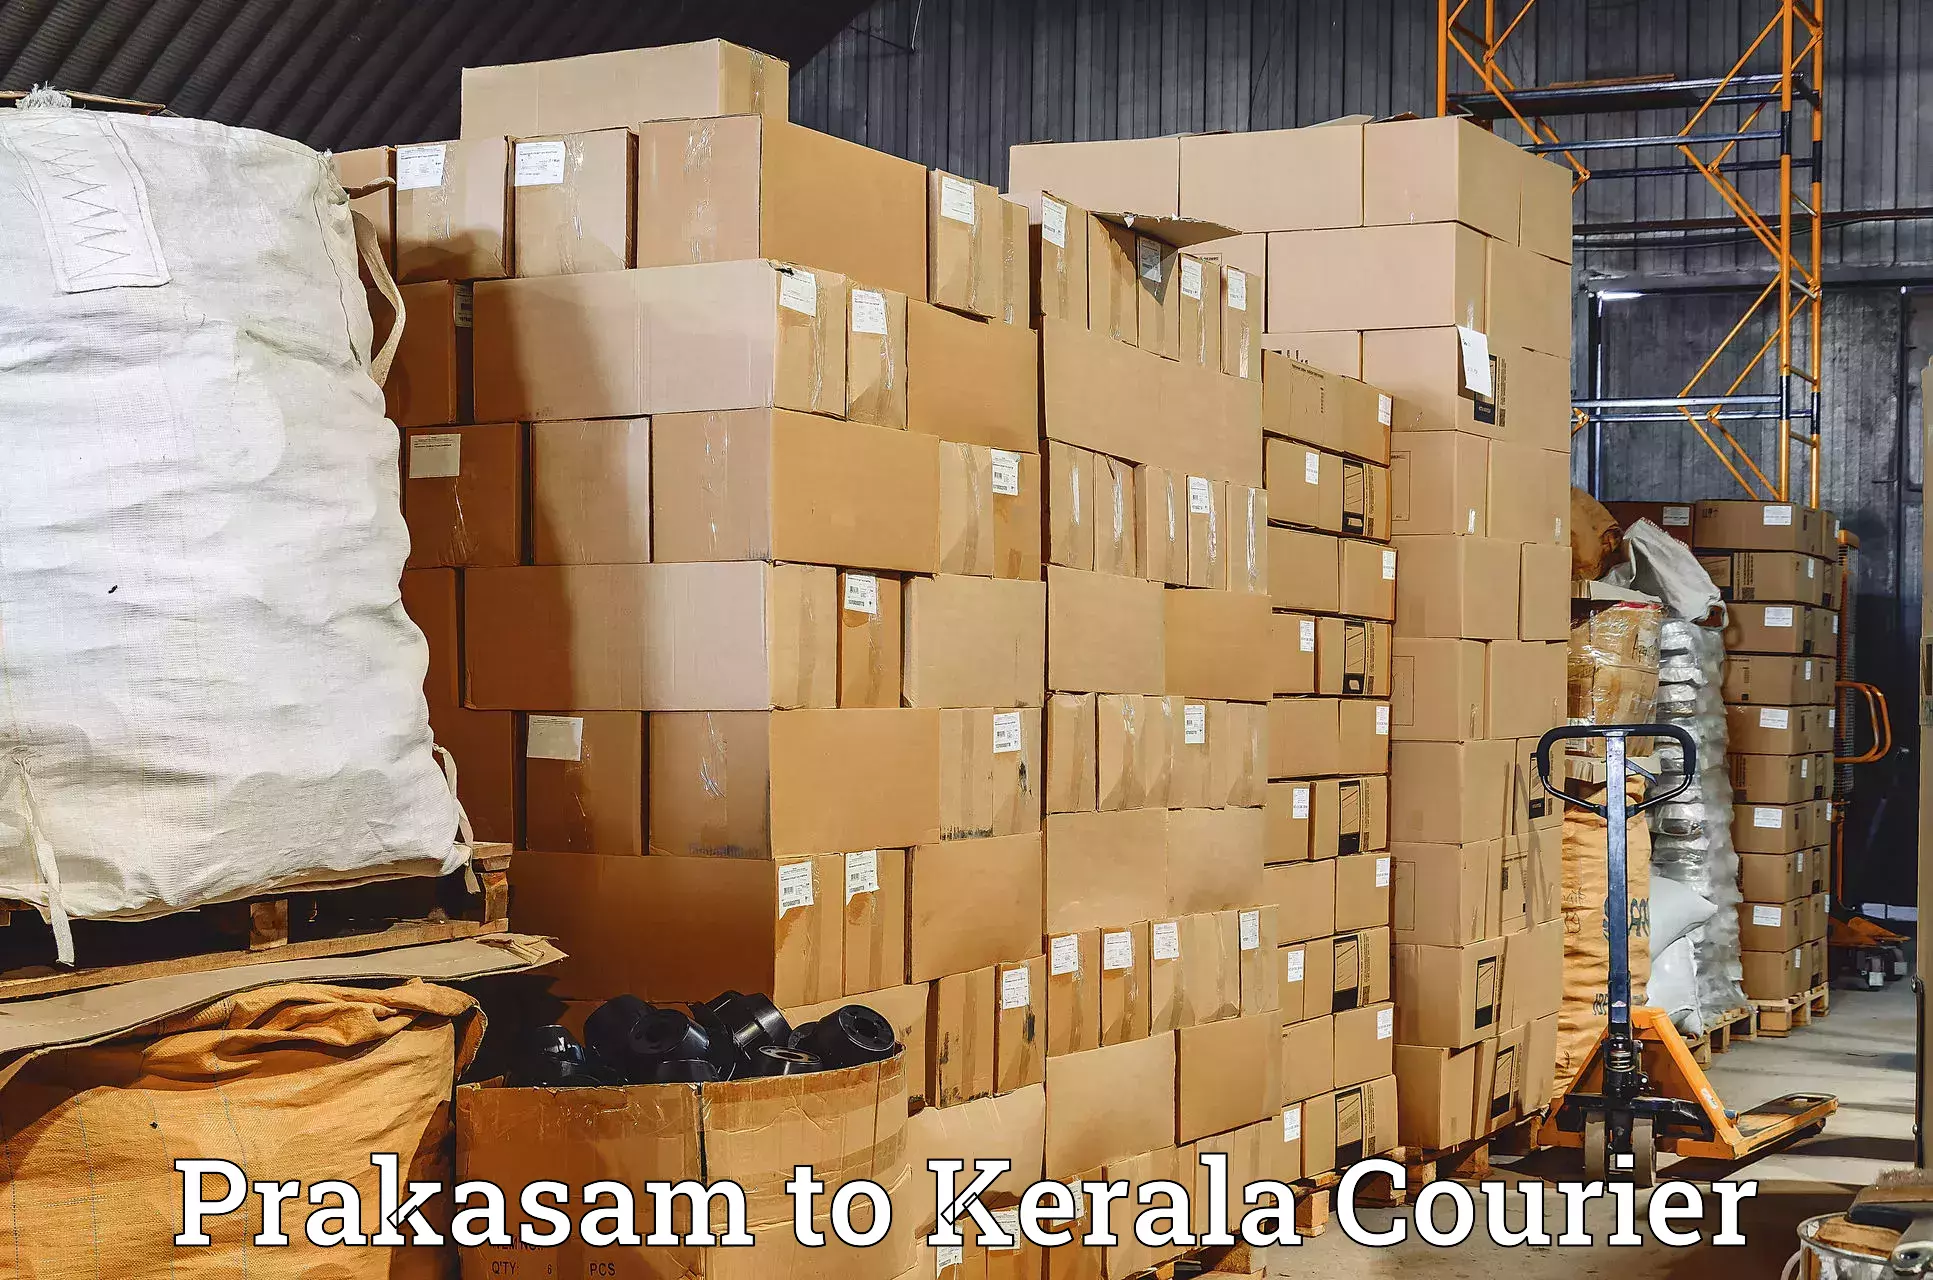 Same-day delivery solutions Prakasam to Kalanjoor